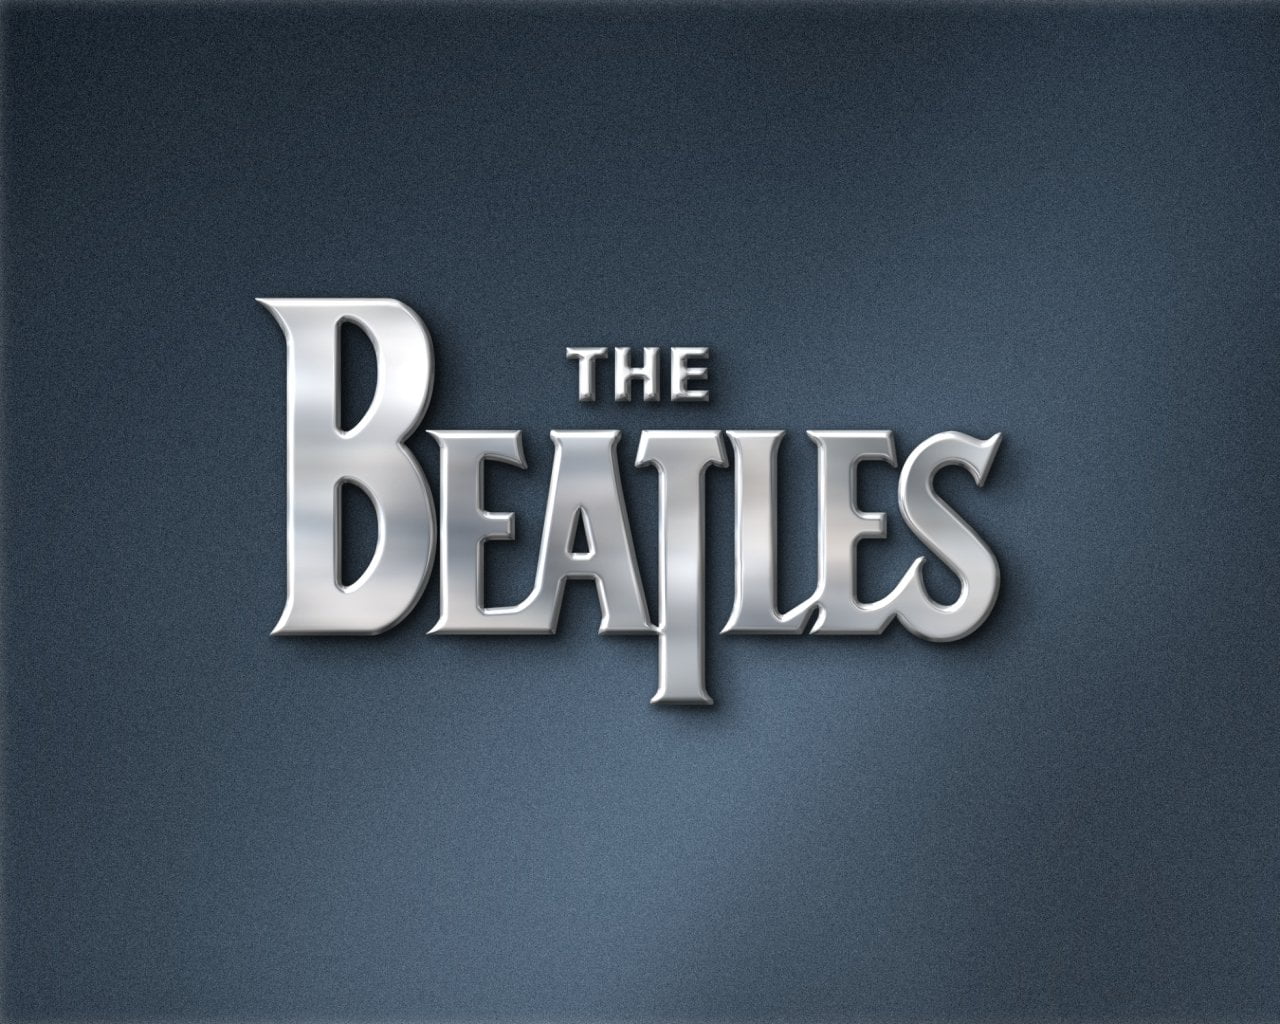 Band (Music), The Beatles, Deep Purple